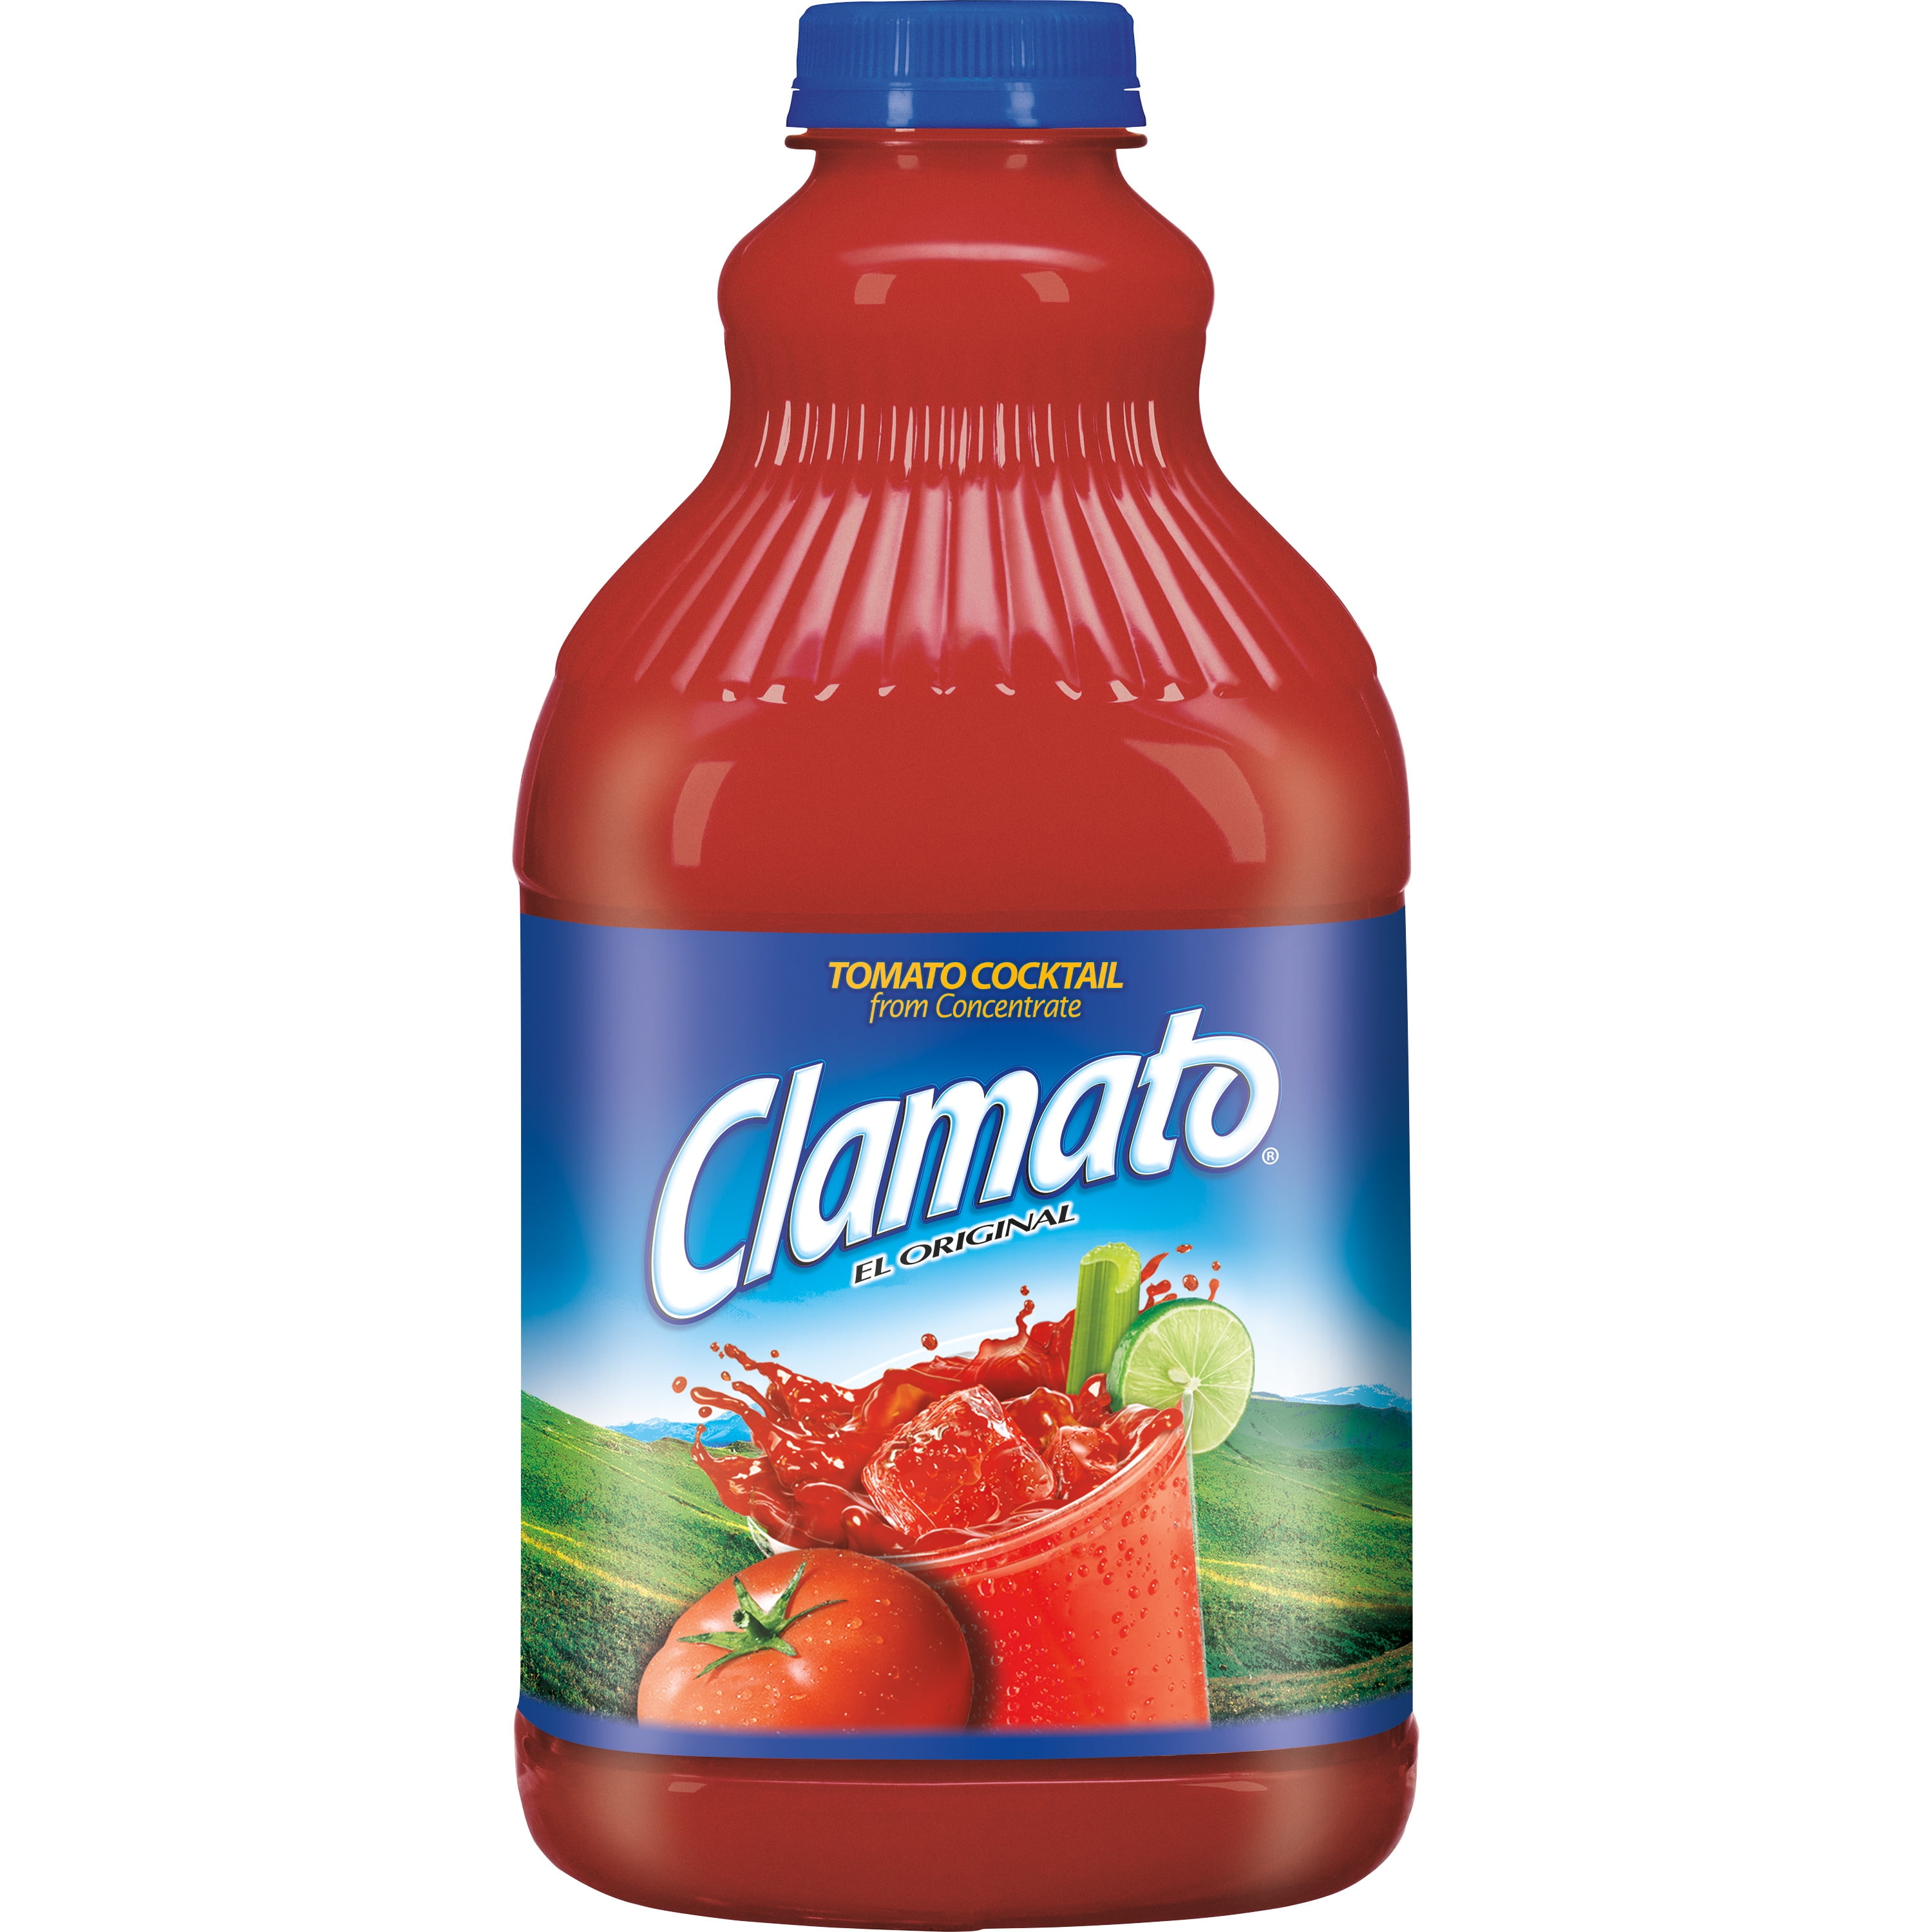 Clamato Original Tomato Cocktail, 64 fl oz bottle - Walmart.com